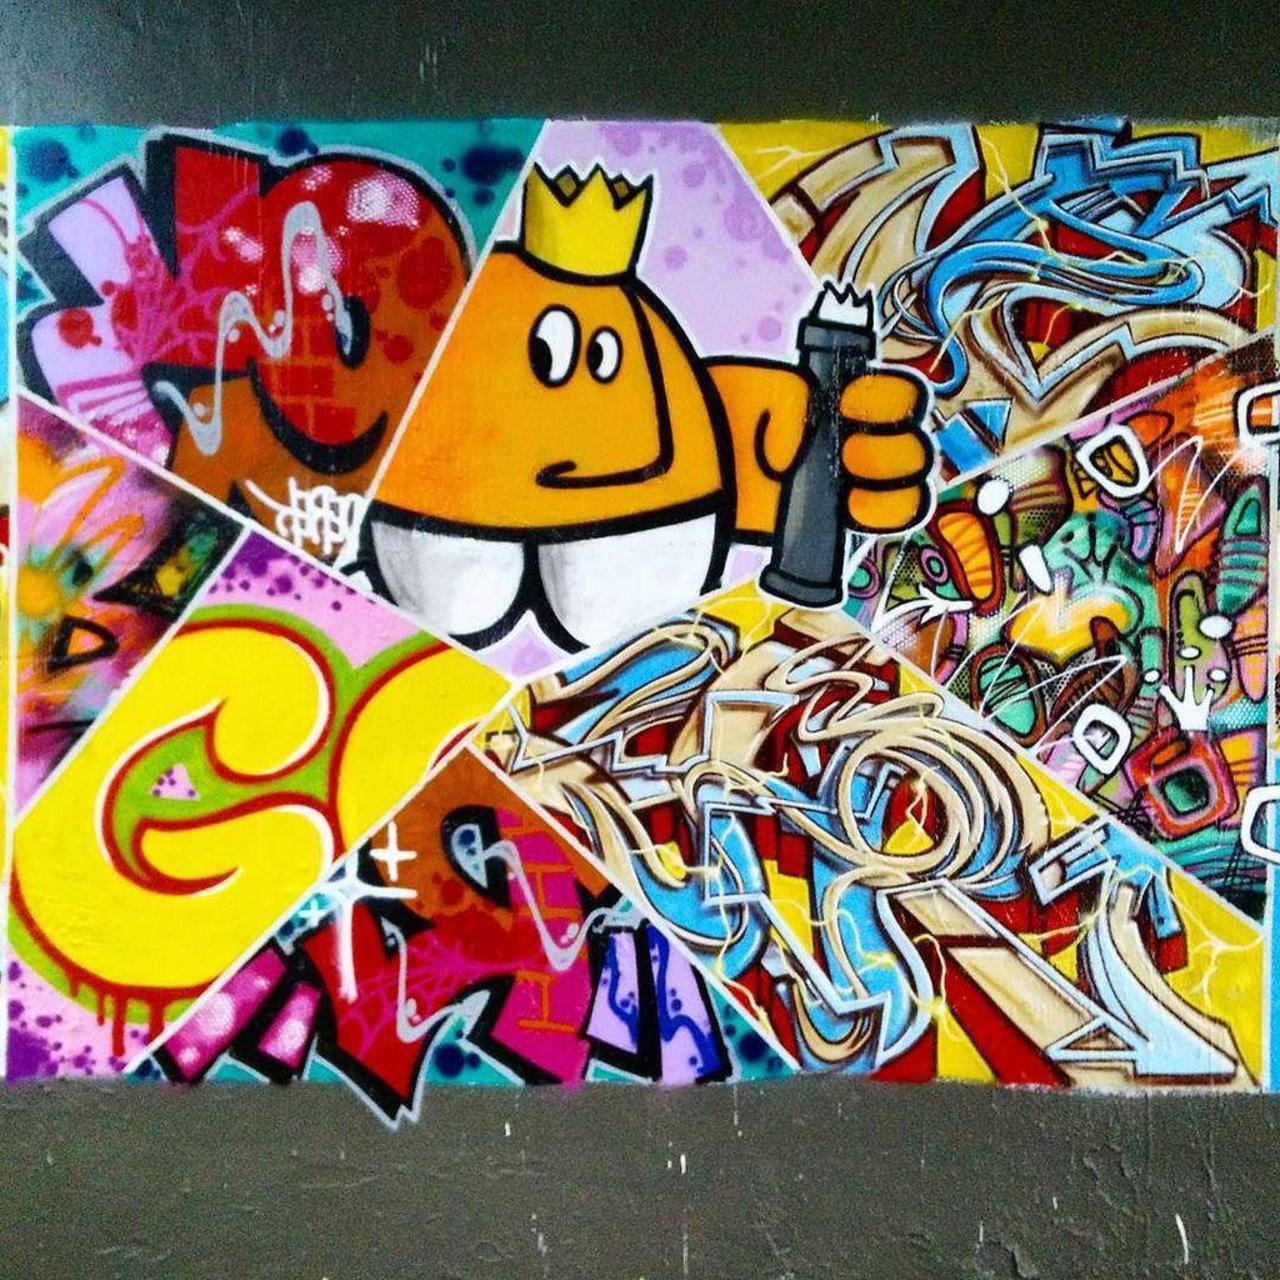 RT @StArtEverywhere: By @meushay and @nebayjct100 
#meushay #nebay #streetart #streetartparis #parisstreetart #parisgraffiti #graffiti #… https://t.co/CkeDB1FVfO